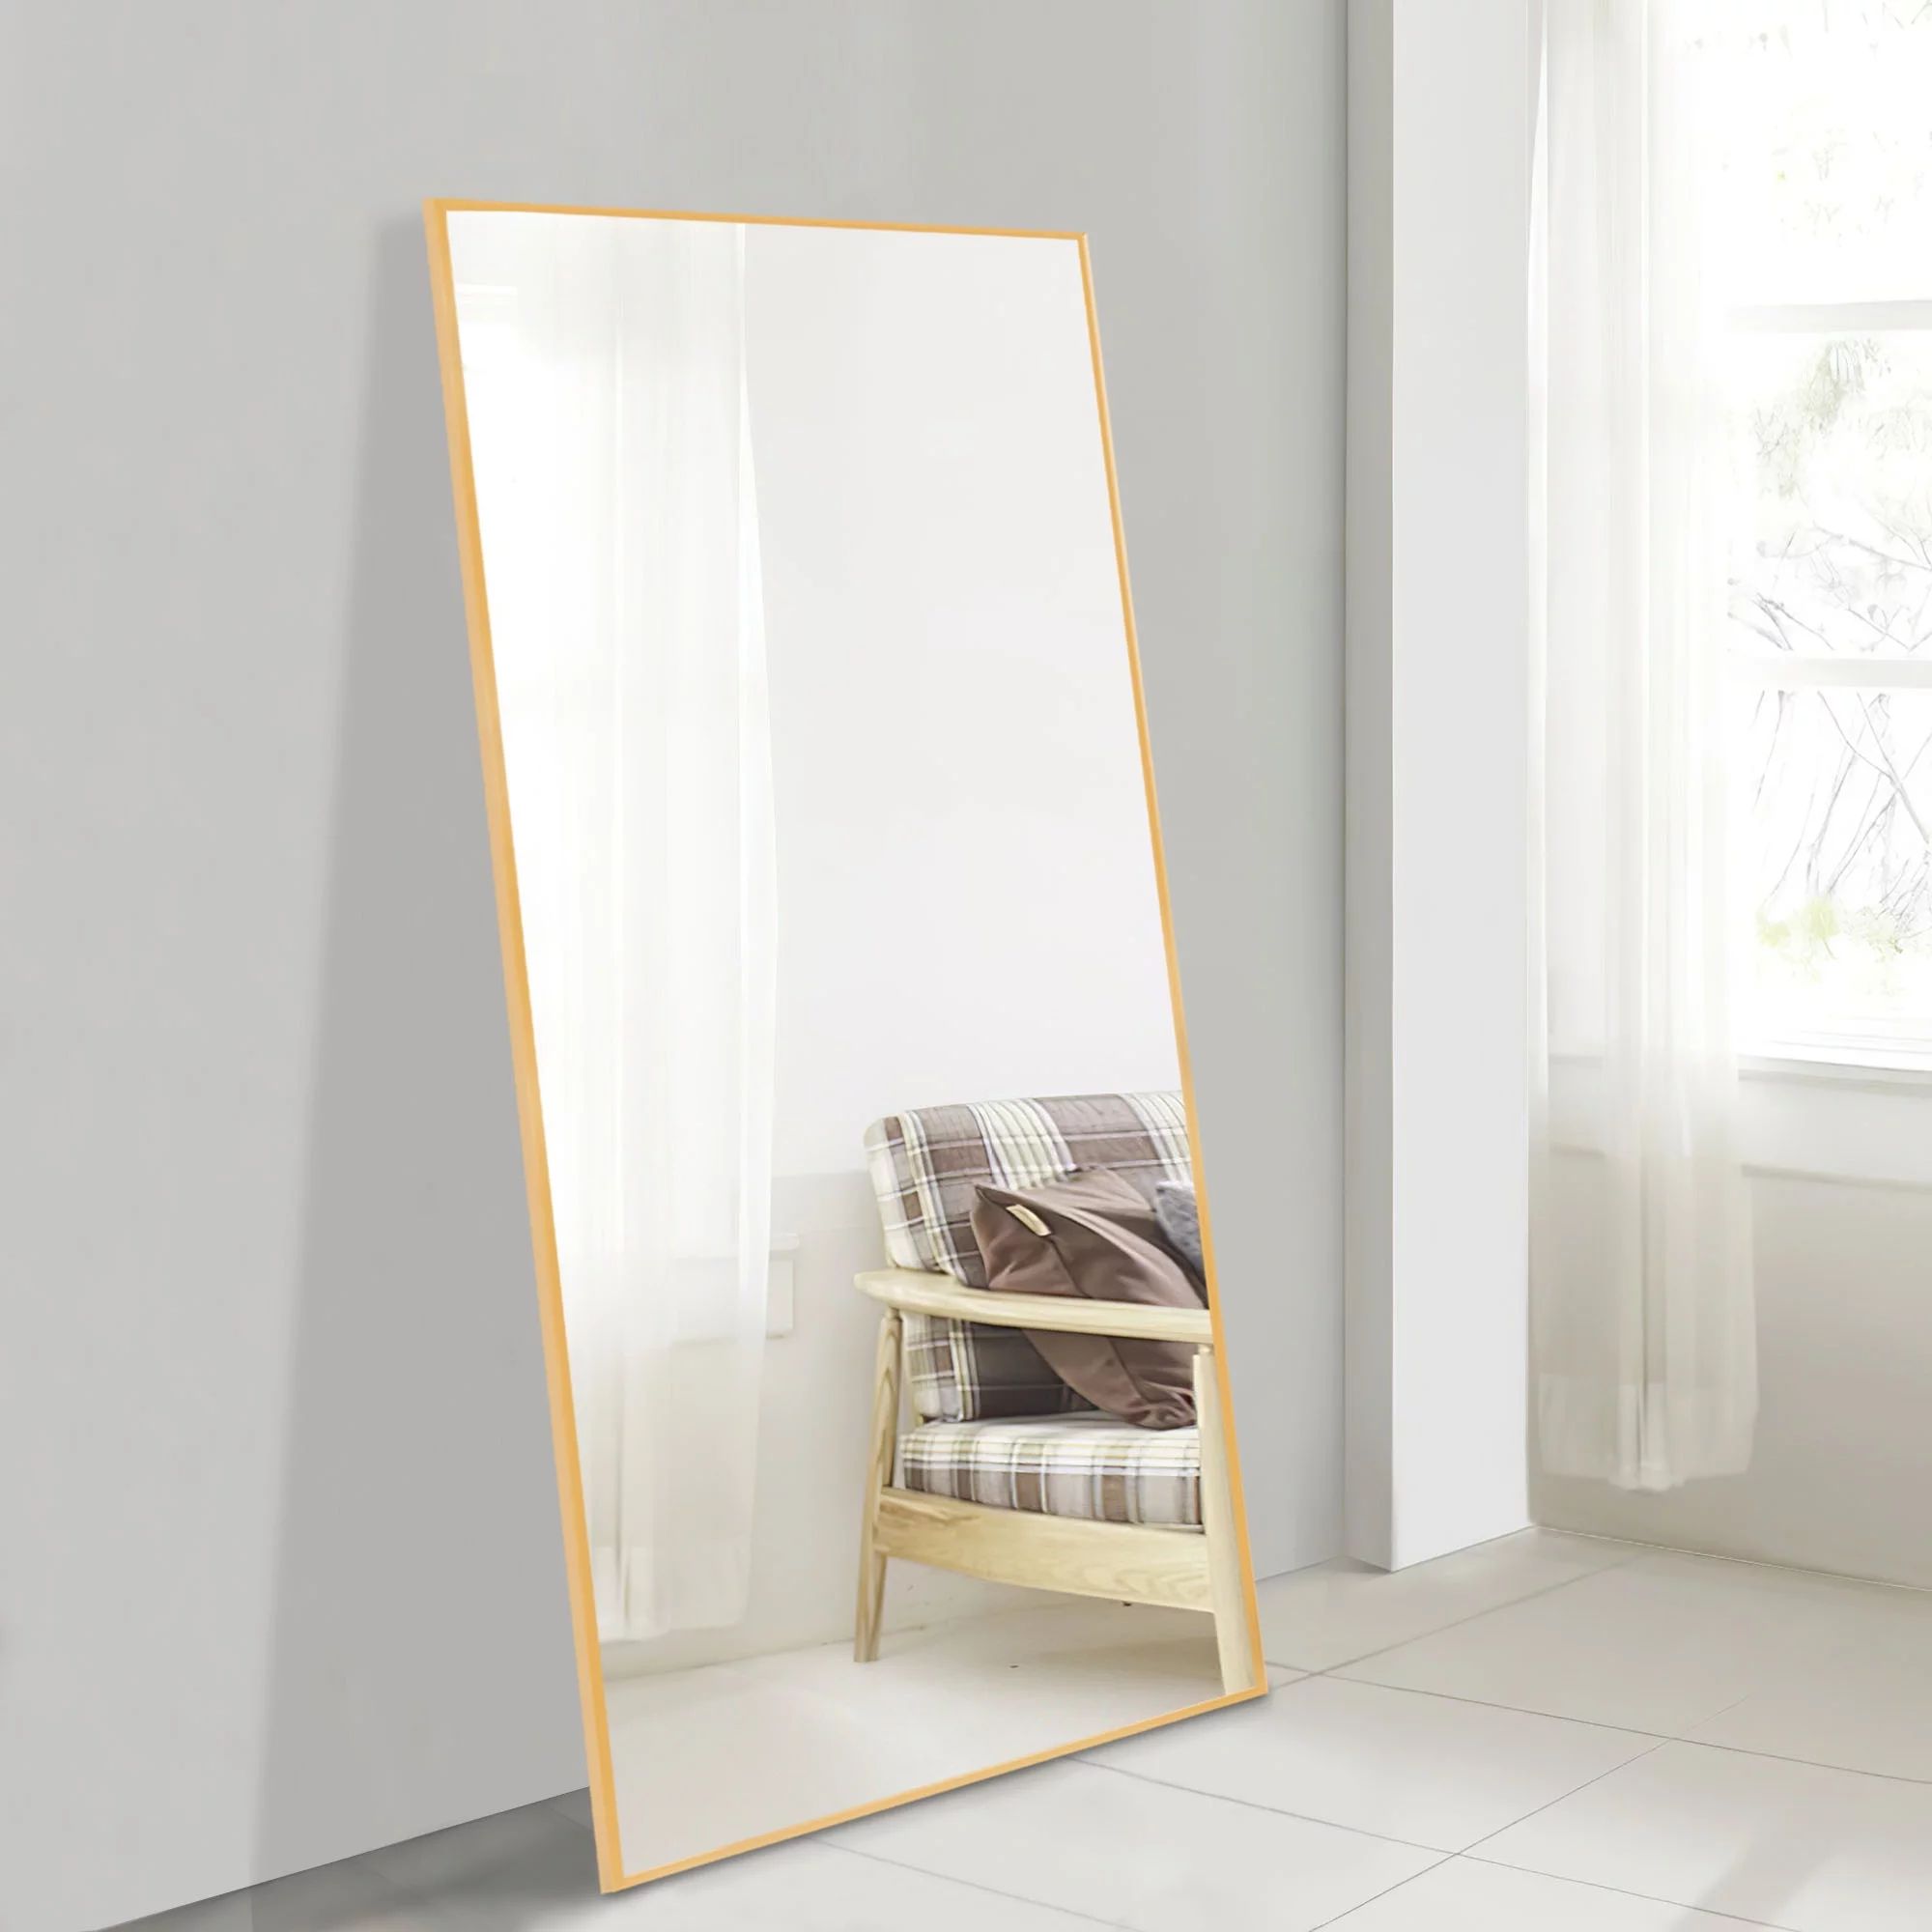 NeuType 55"x16" Gold Rectangular Full Length Floor Mirror with Stand Aluminum Alloy Frame | Walmart (US)